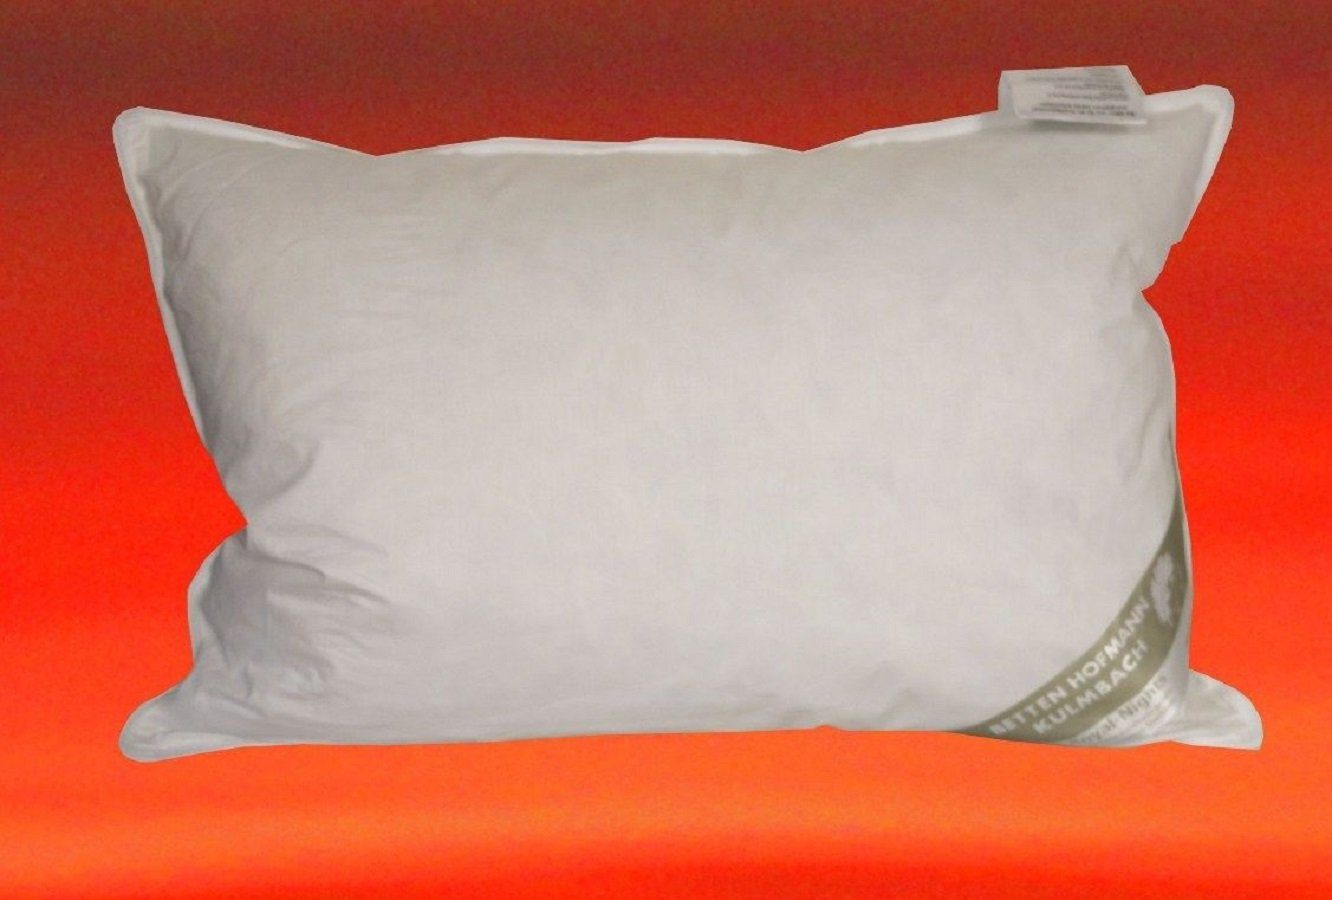 Kopfkissen JAPAN Kissen Kopfkissen Daunenkissen 43x63cm 60% Daunen angenehm weich, Betten Hofmann, Bezug: 100% Baumwolle, Kopfkissen, Rückenschläfer, Seitenschläfer